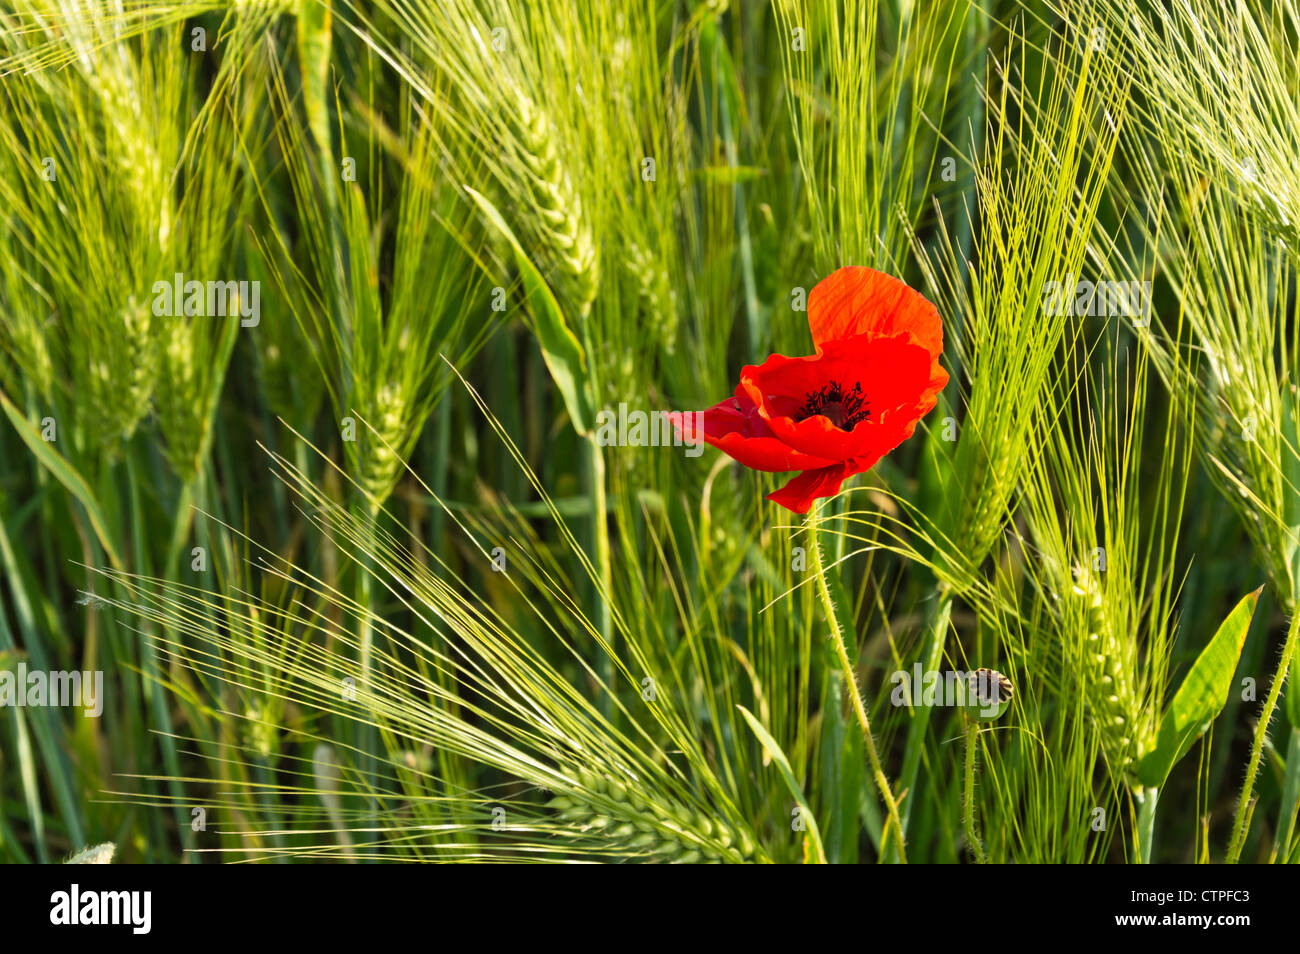 Corn poppy (Papaver rhoeas) and barley (Hordeum vulgare) Stock Photo